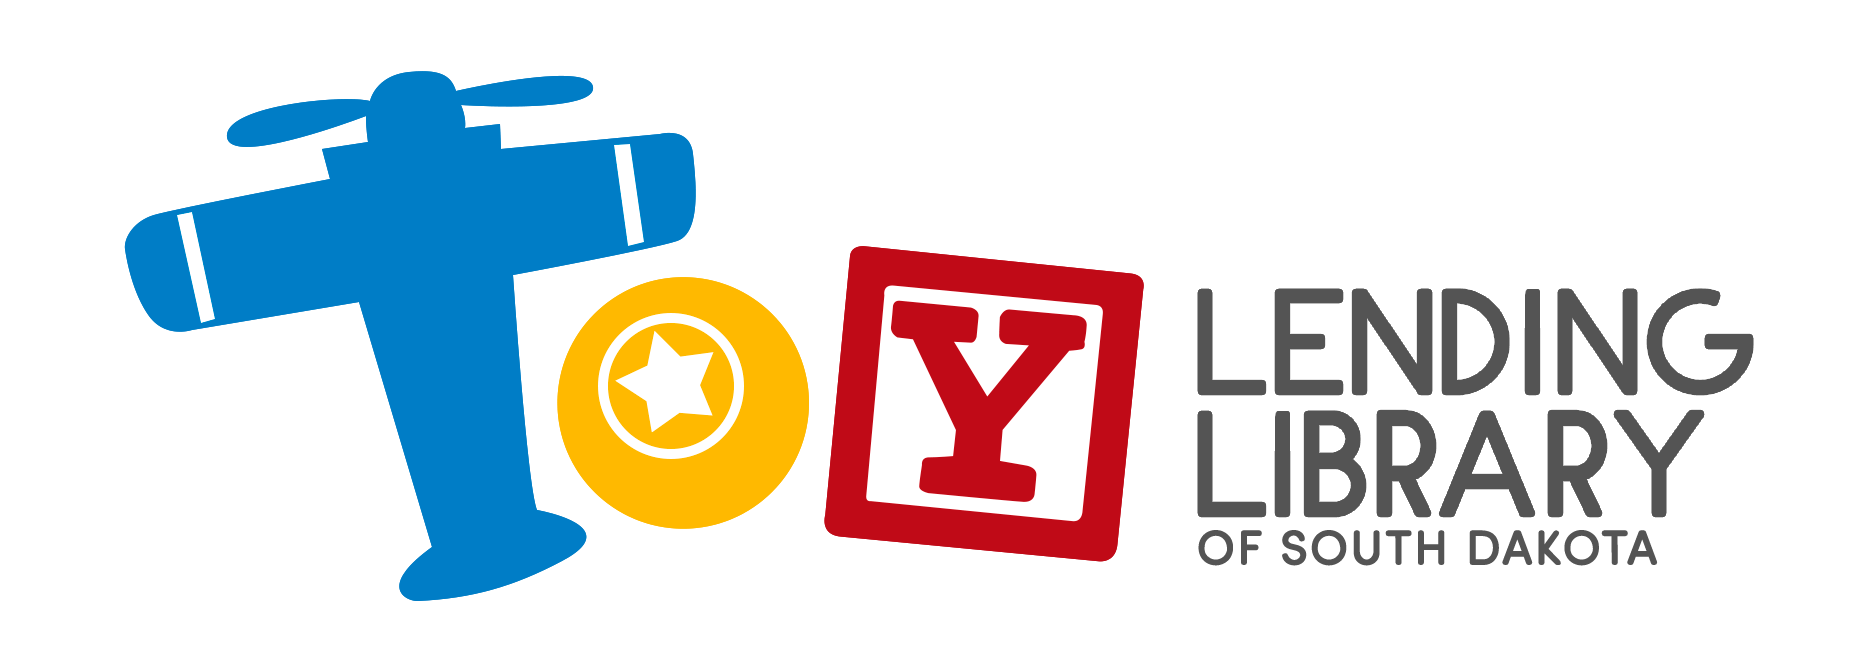 Toy Lending Library South Dakota Logo